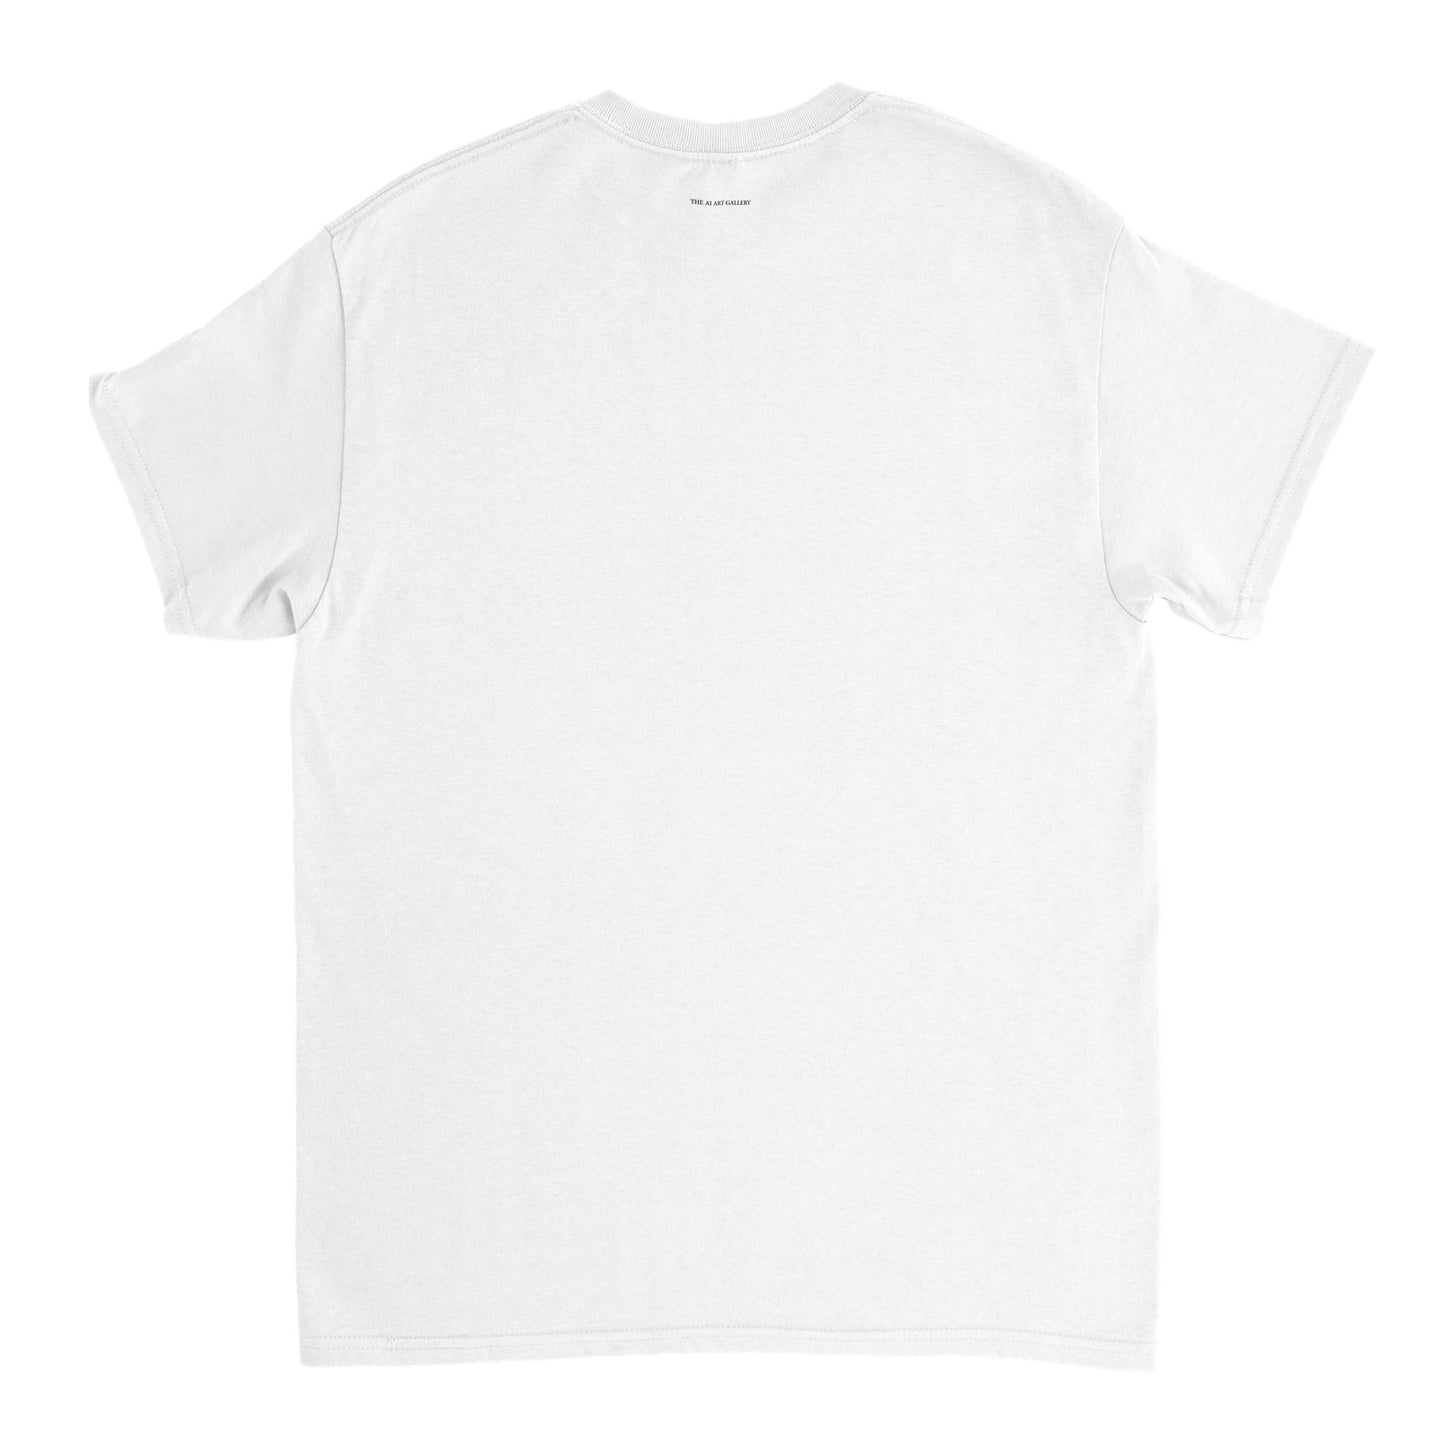 caeruleus saltator / SS23 / T-shirt / white